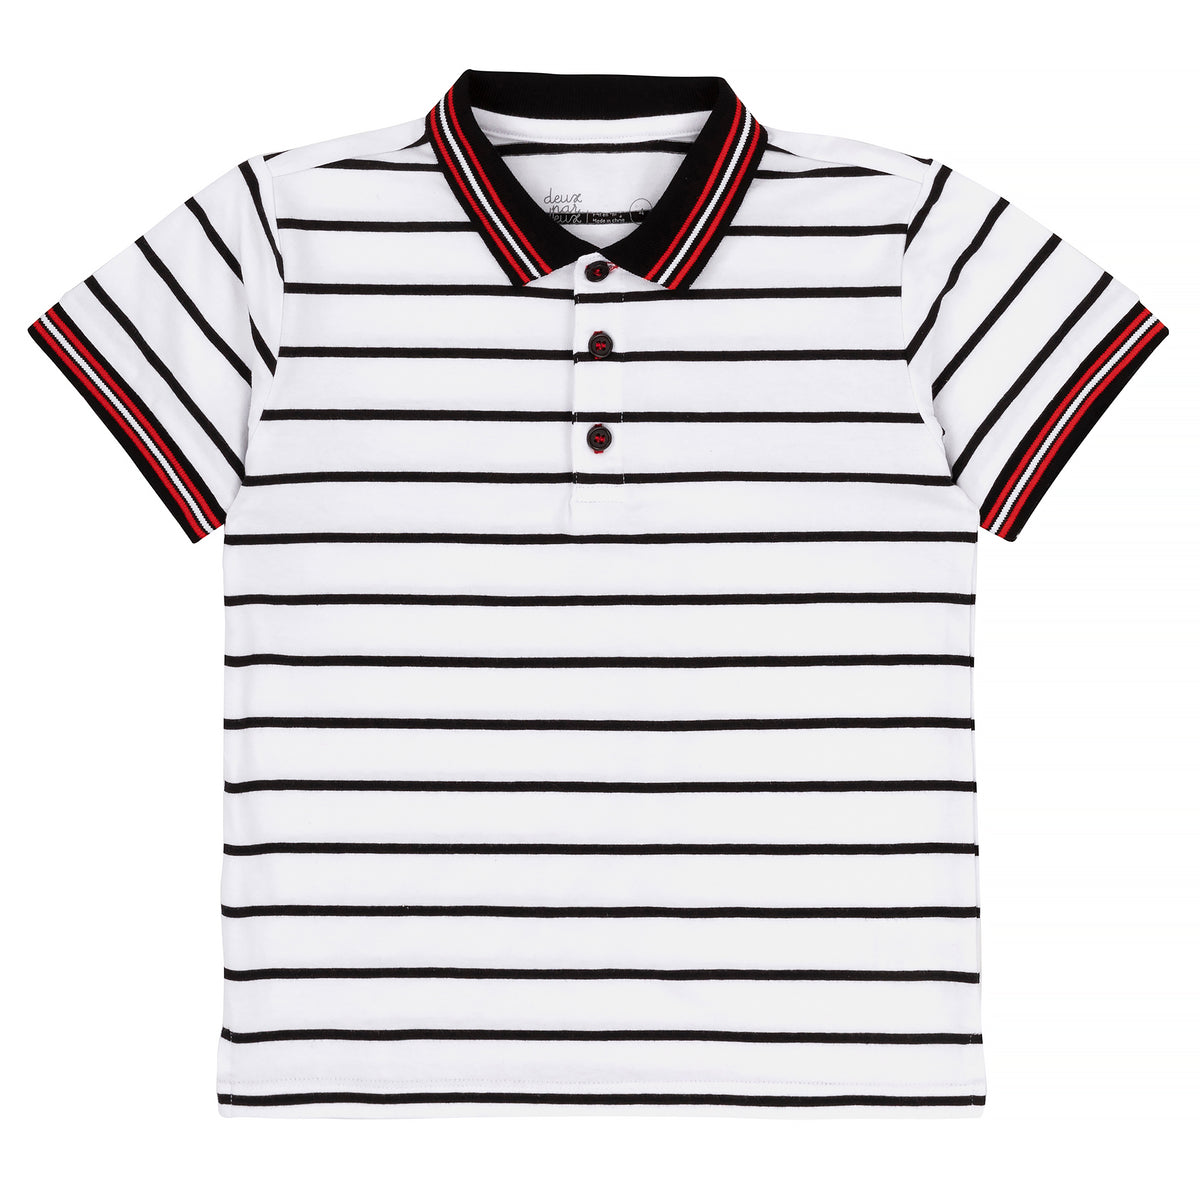 Boys Black and White Striped Polo Shirt